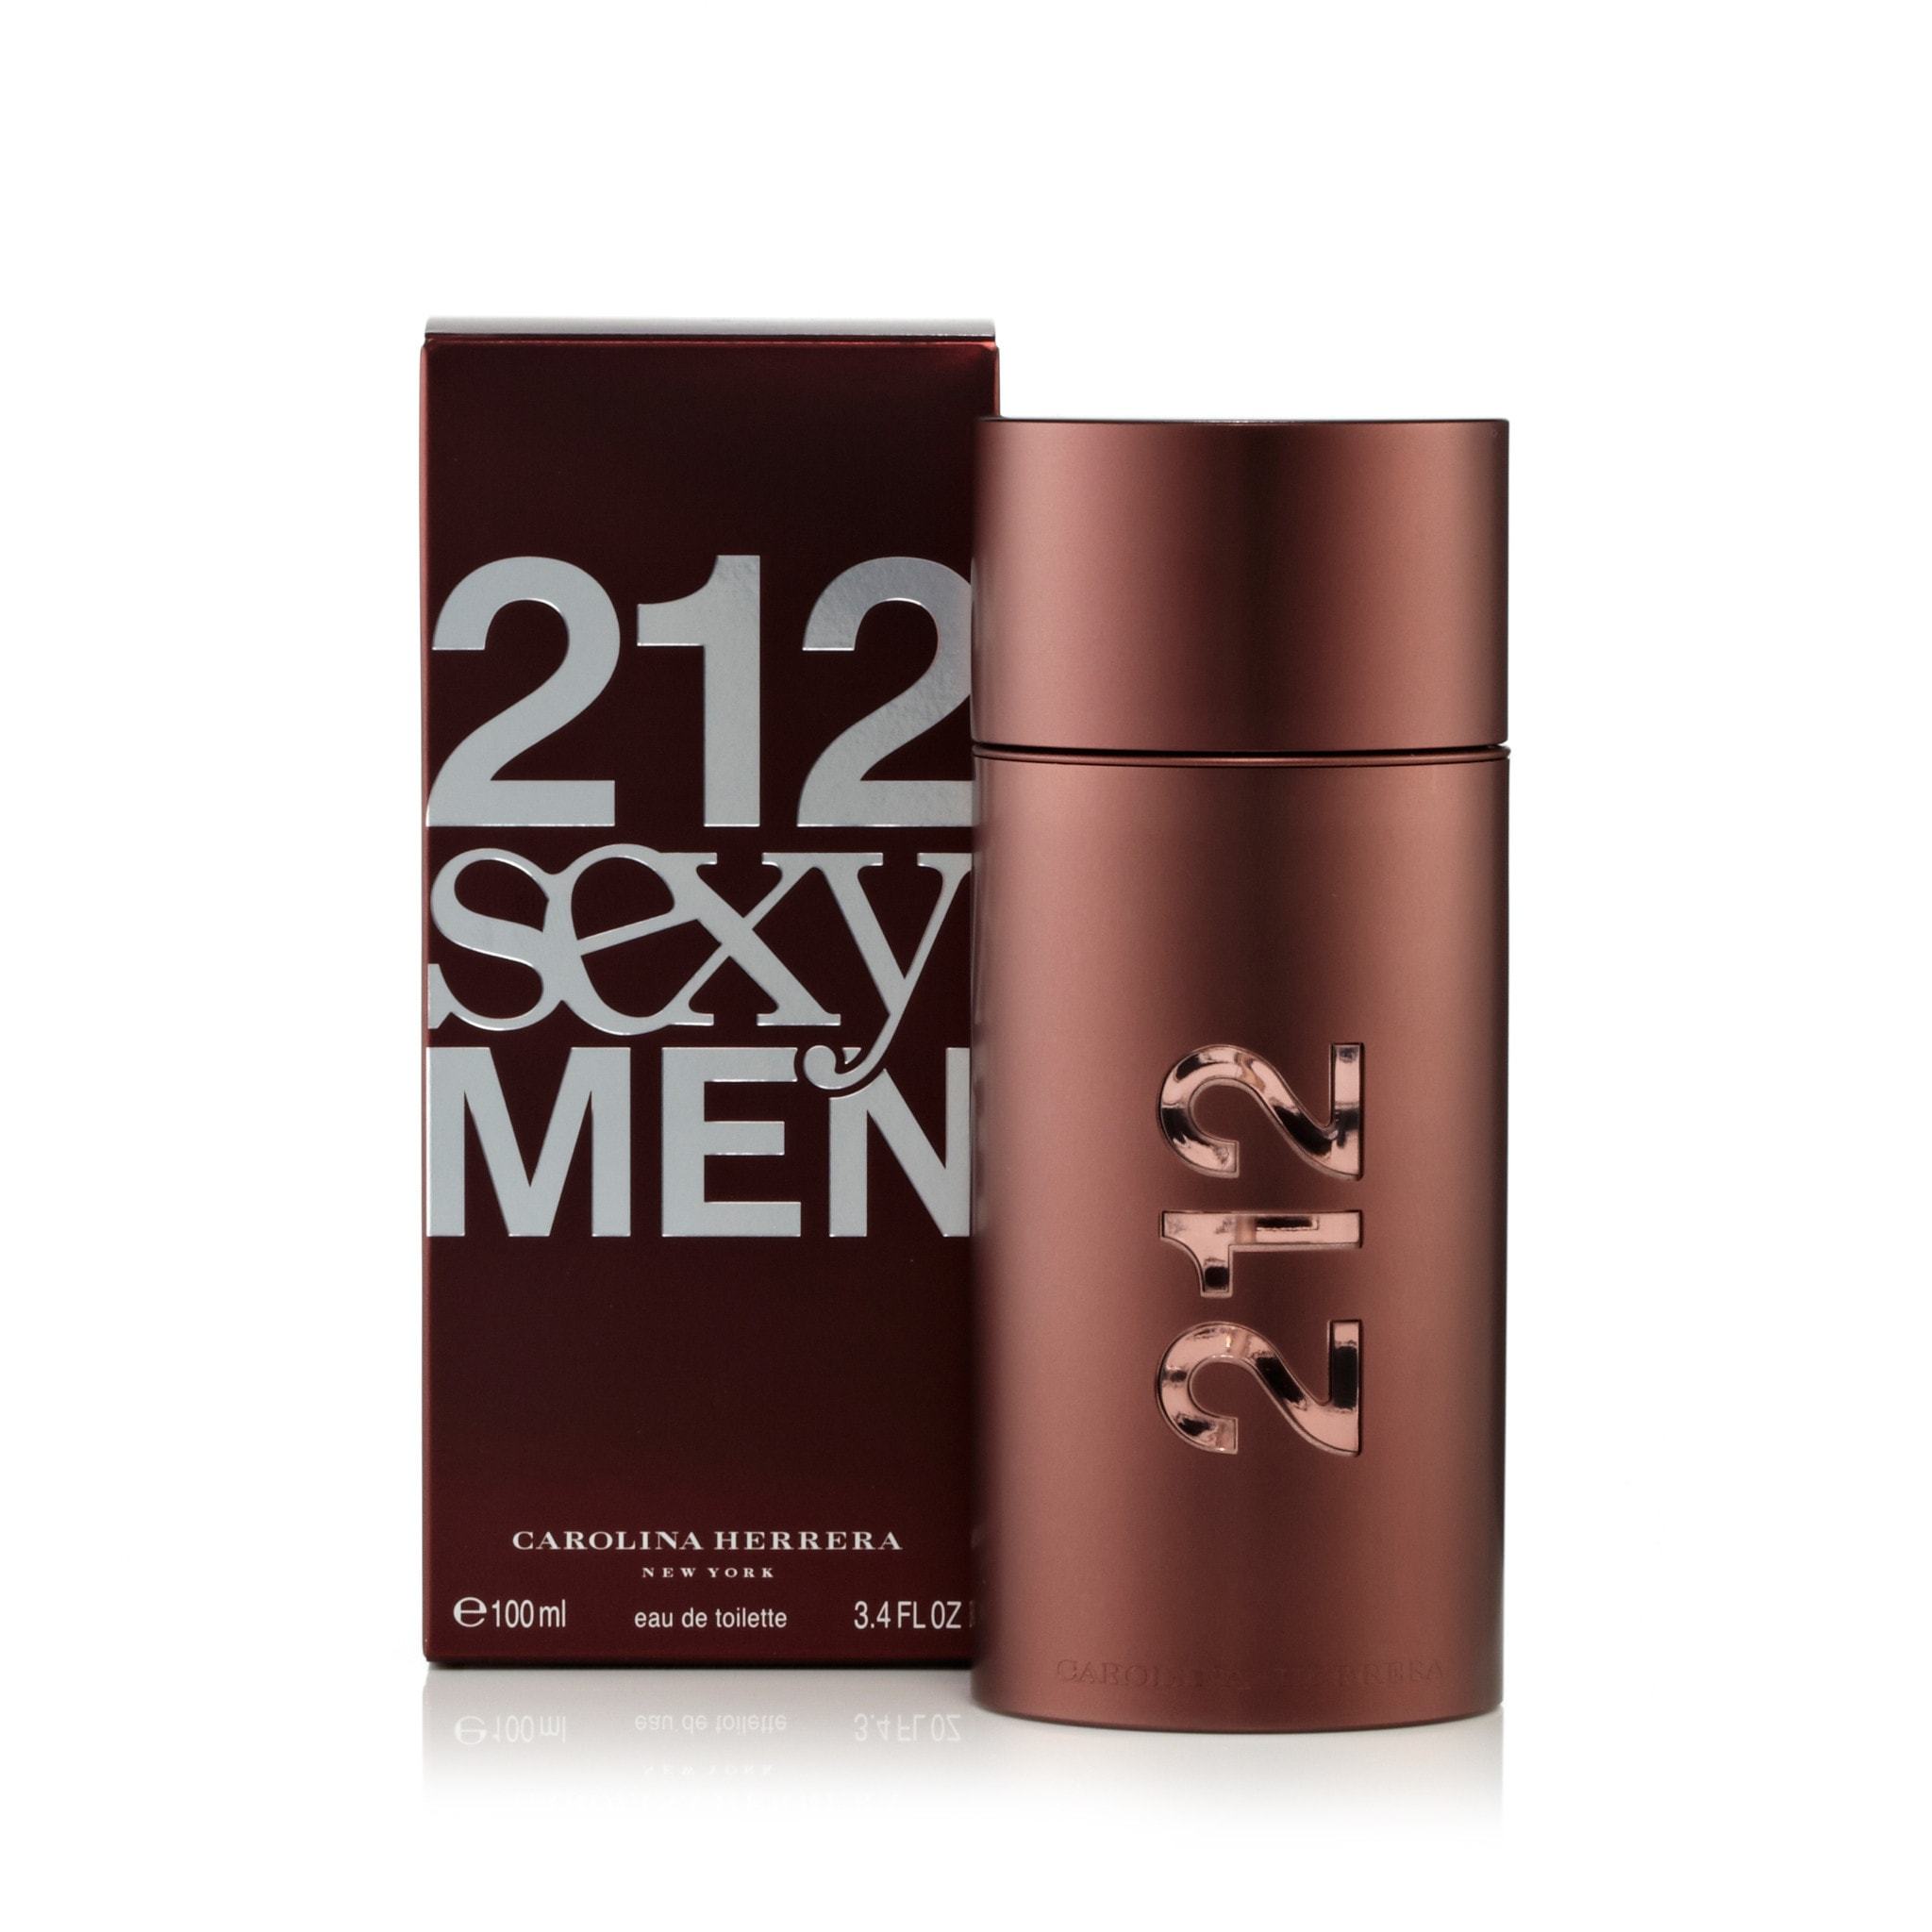 EDT Fragrance 212 Outlet Carolina – Men for Sexy Men Herrera by